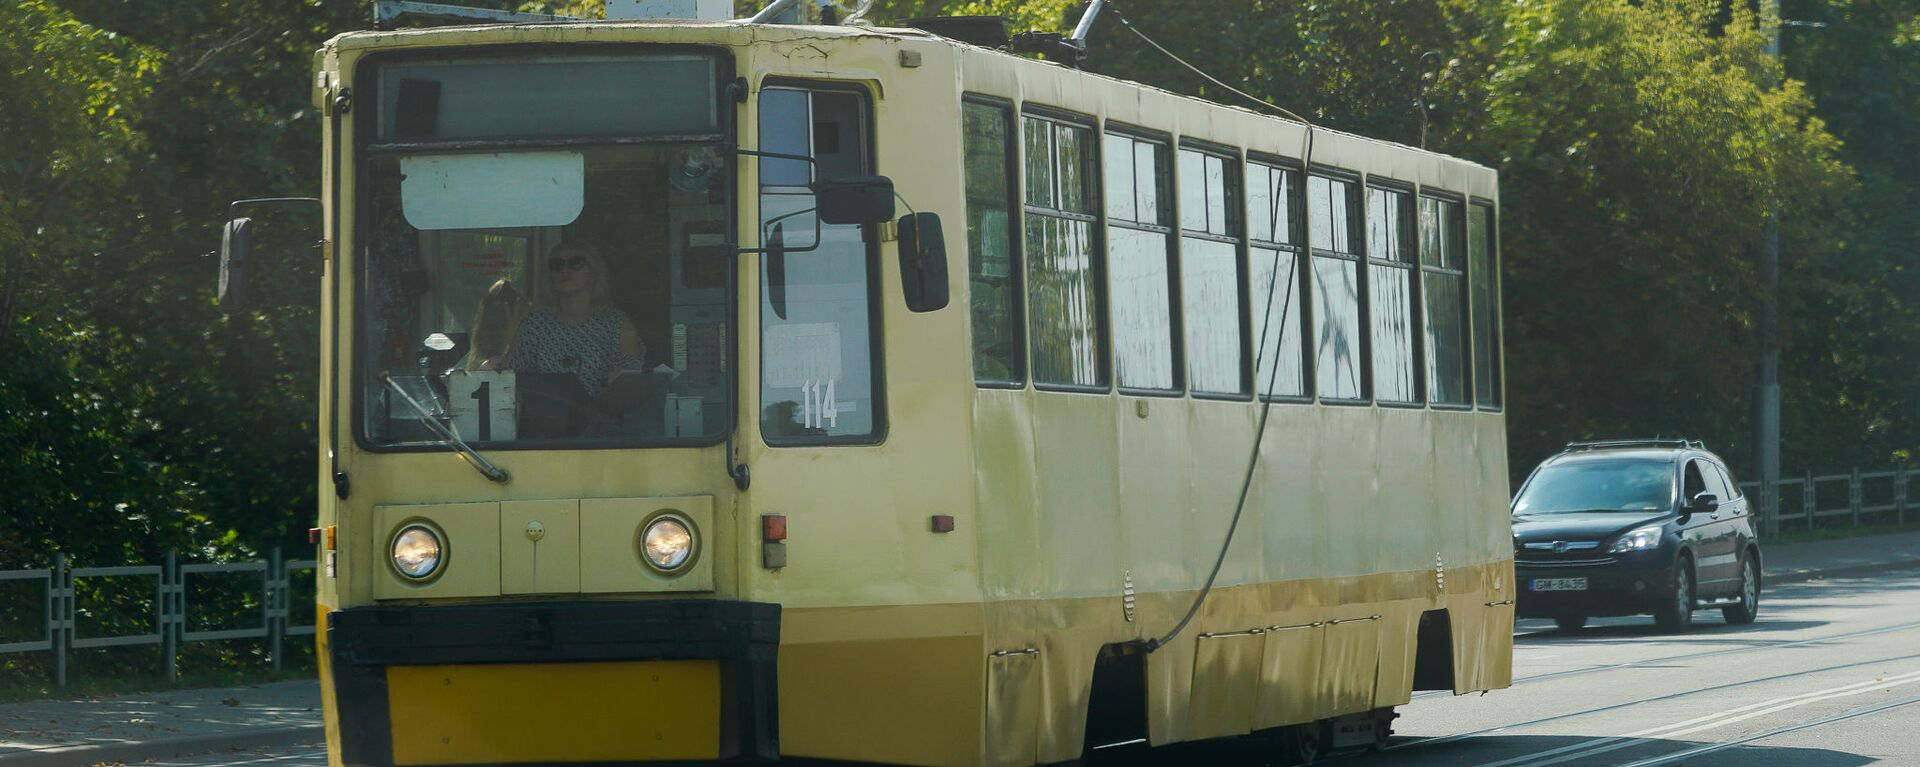 Старый трамвай в Даугавпилсе - Sputnik Латвия, 1920, 04.09.2021